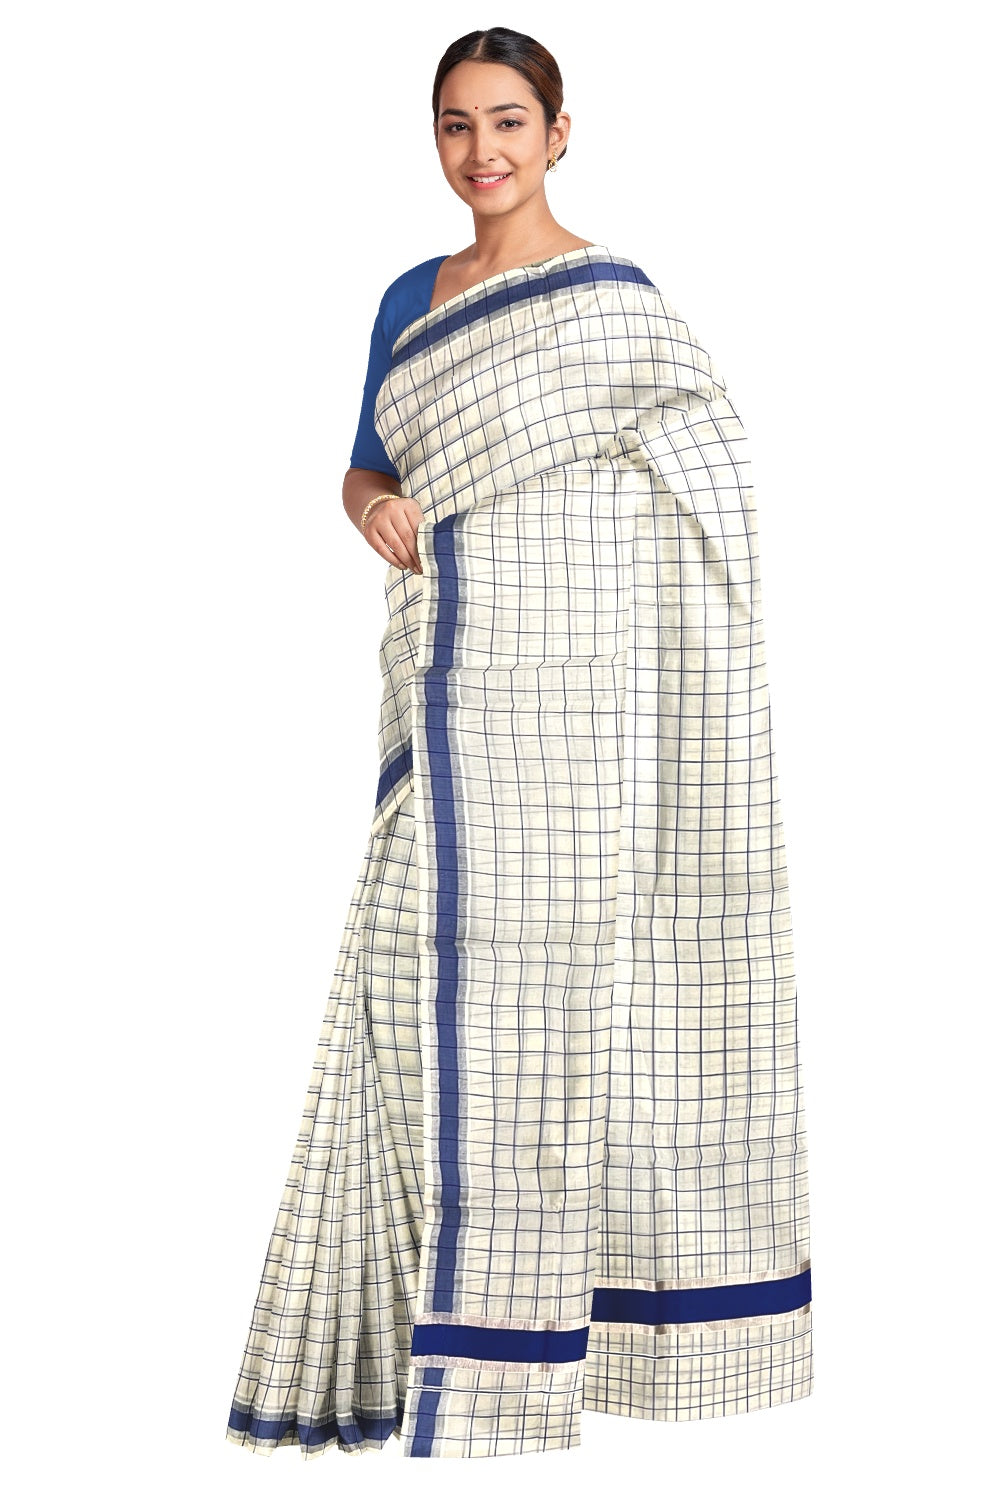 Pure Cotton Kerala Blue Checkered Saree with Silver Kasavu and Blue Border